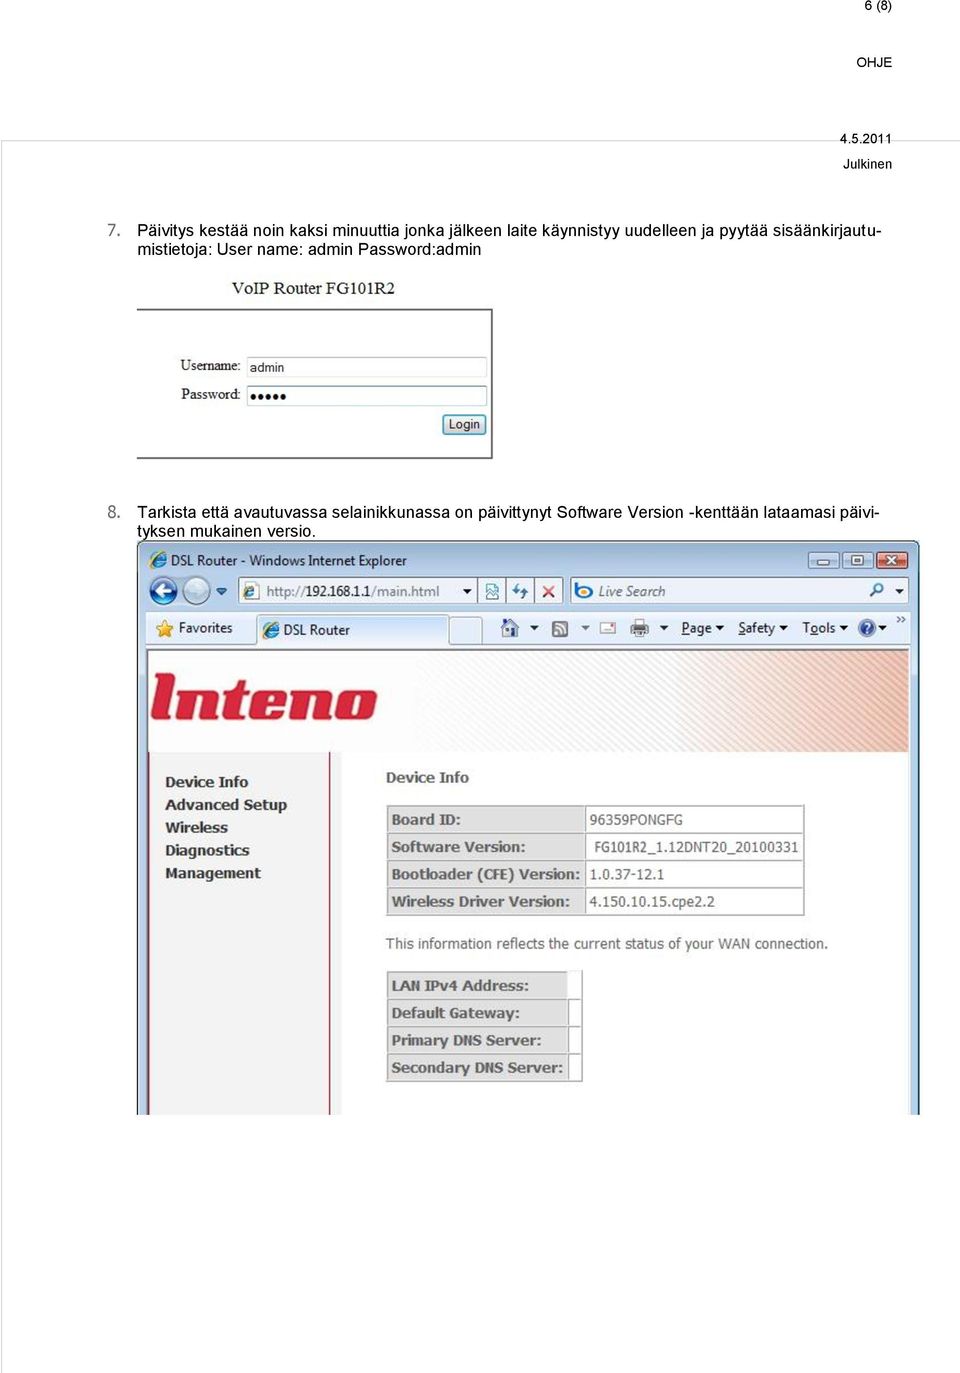 Inteno FG101 R2 modeemi - päivitysohje - PDF Free Download